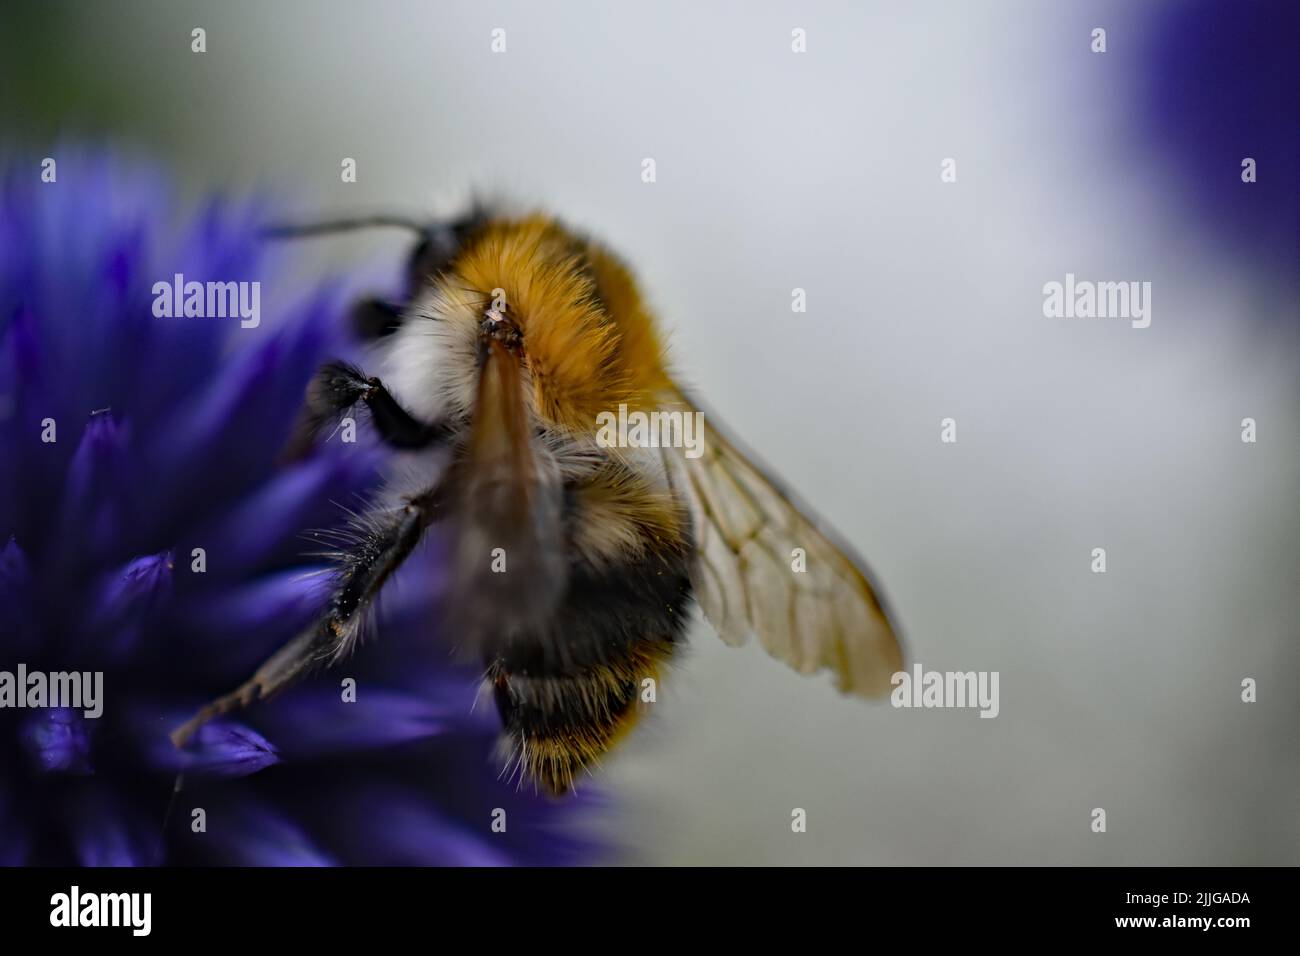 bee close-up Stock Photo